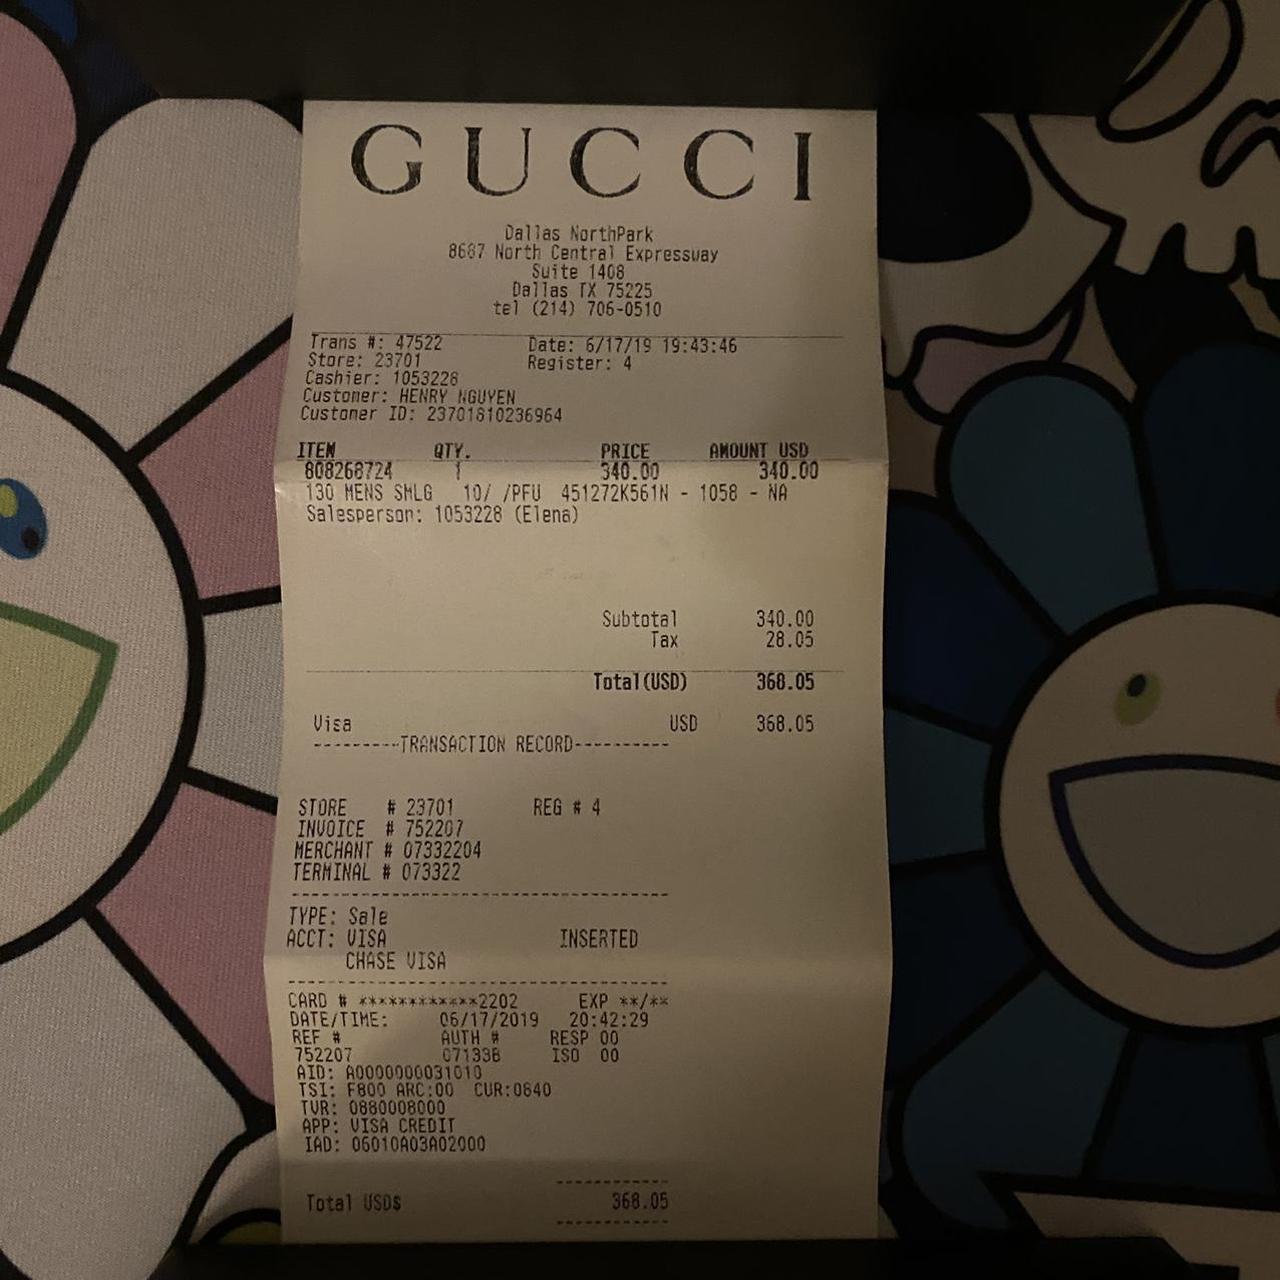 Gucci Long Wallet - 130 MEN SMLG